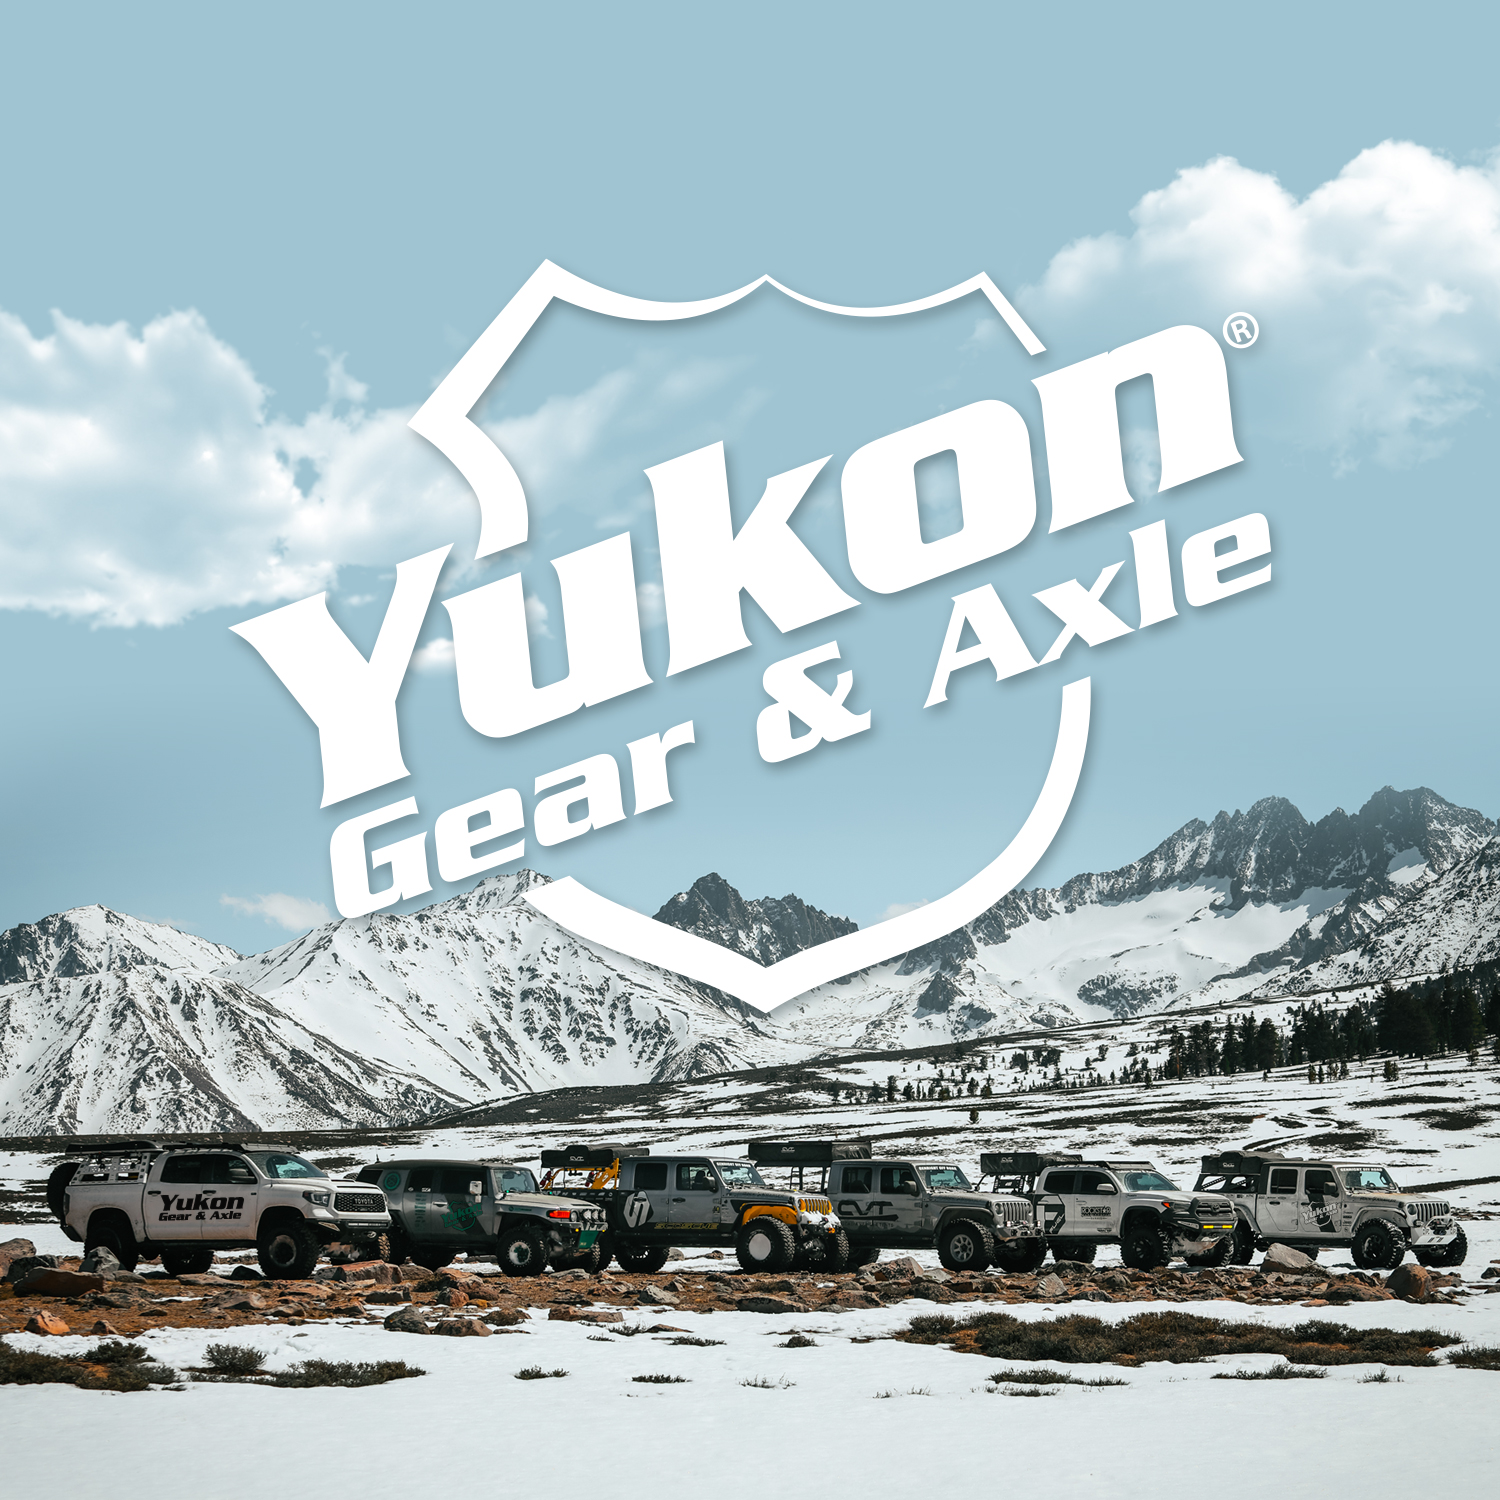 Yukon high performance ring & pinion set, Toyota Tacoma/T100, 3.73 ratio 